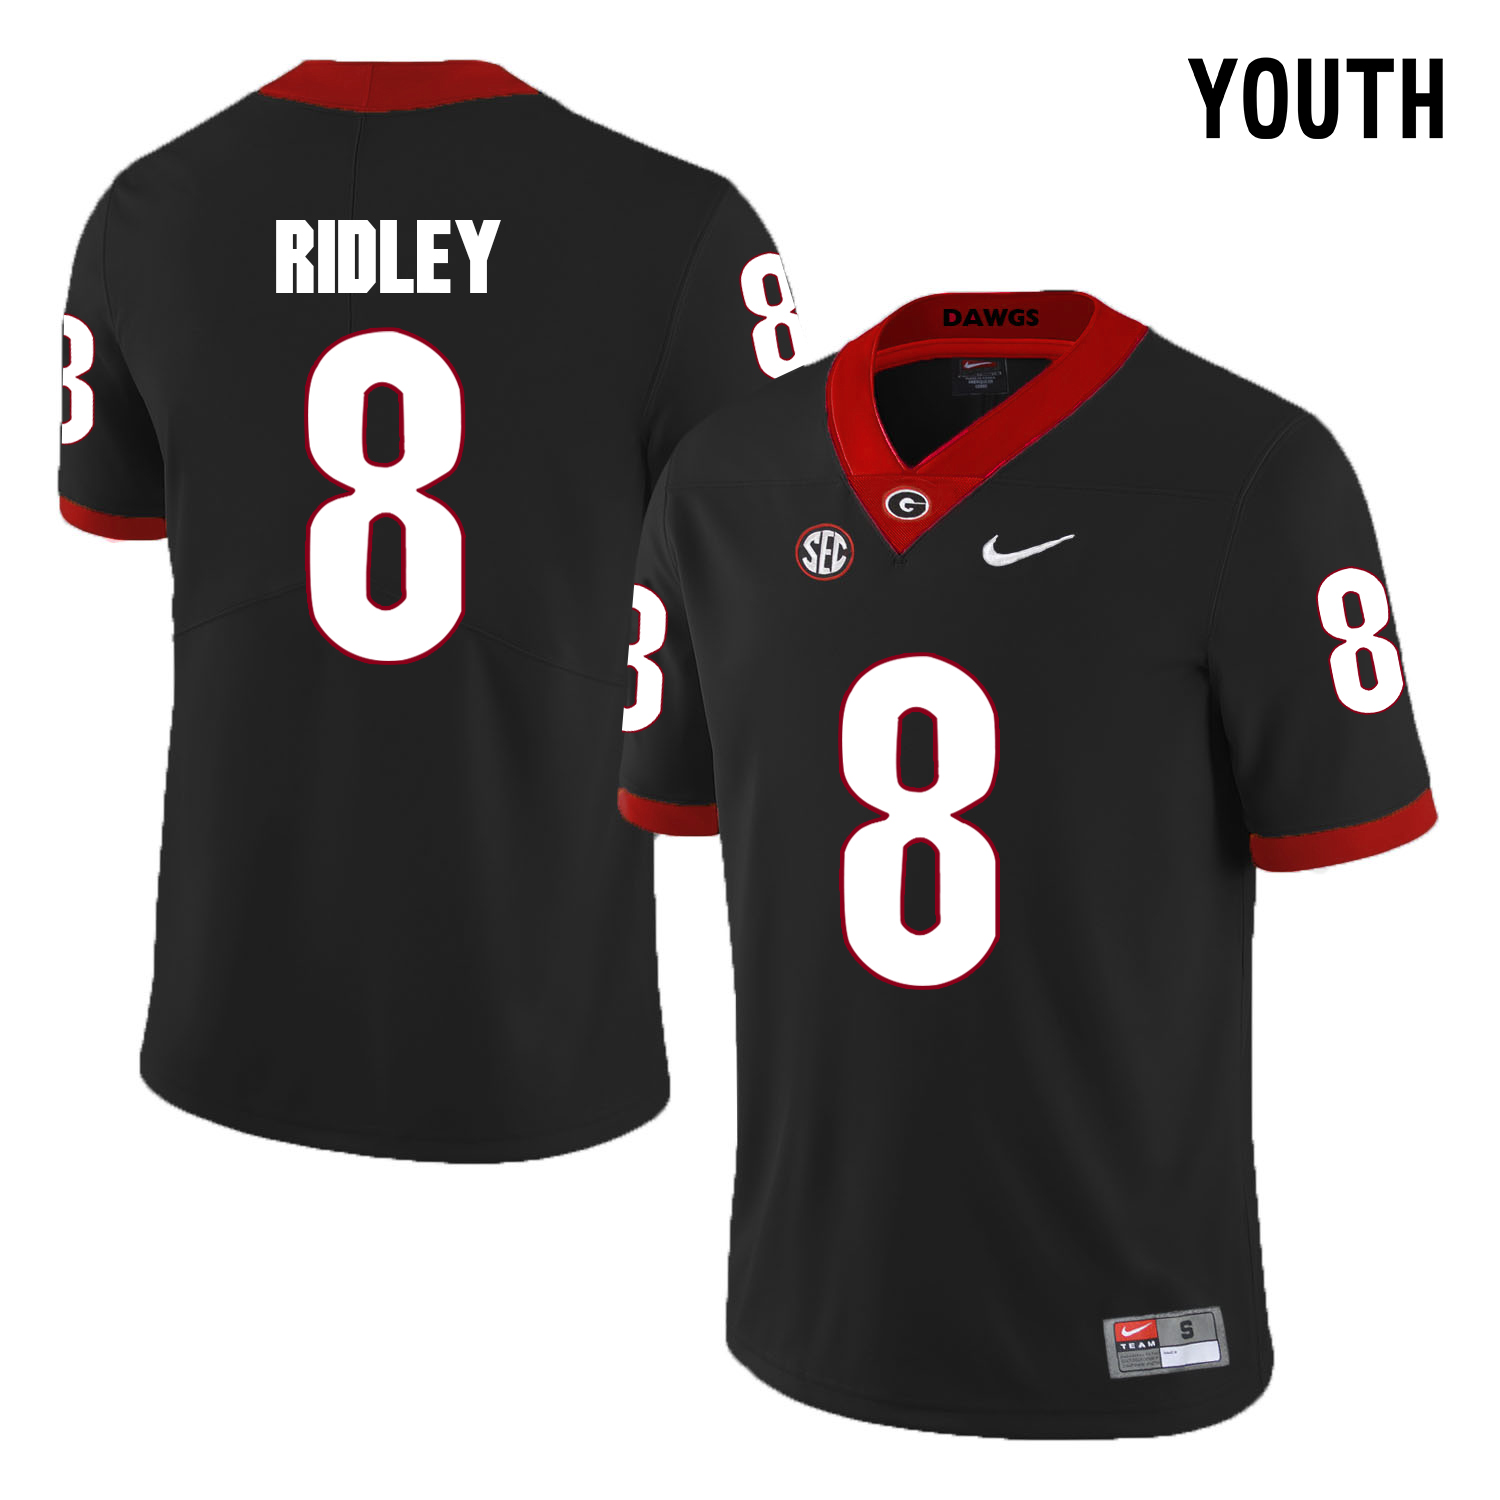 Georgia Bulldogs 8 Riley Ridley Black Youth College Football Jersey